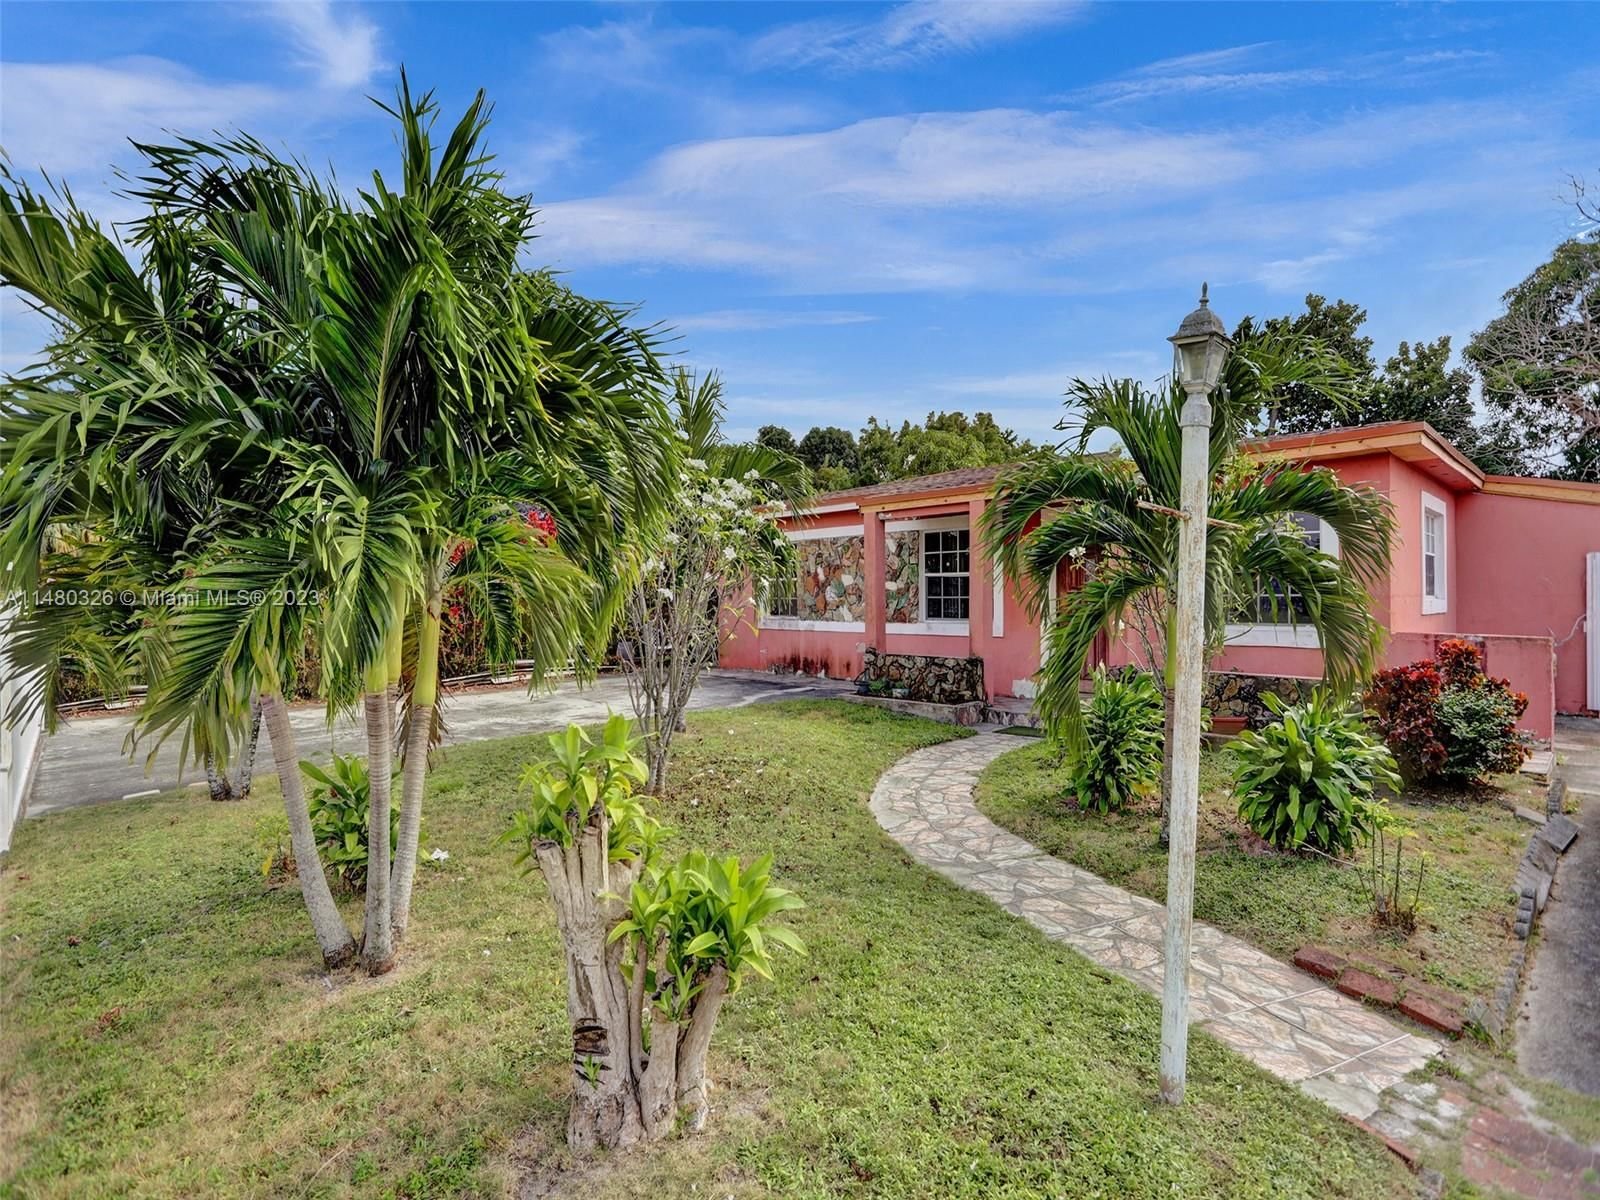 Real estate property located at 3520 98th St, Miami-Dade County, THE TROPICS ADDN, Miami, FL